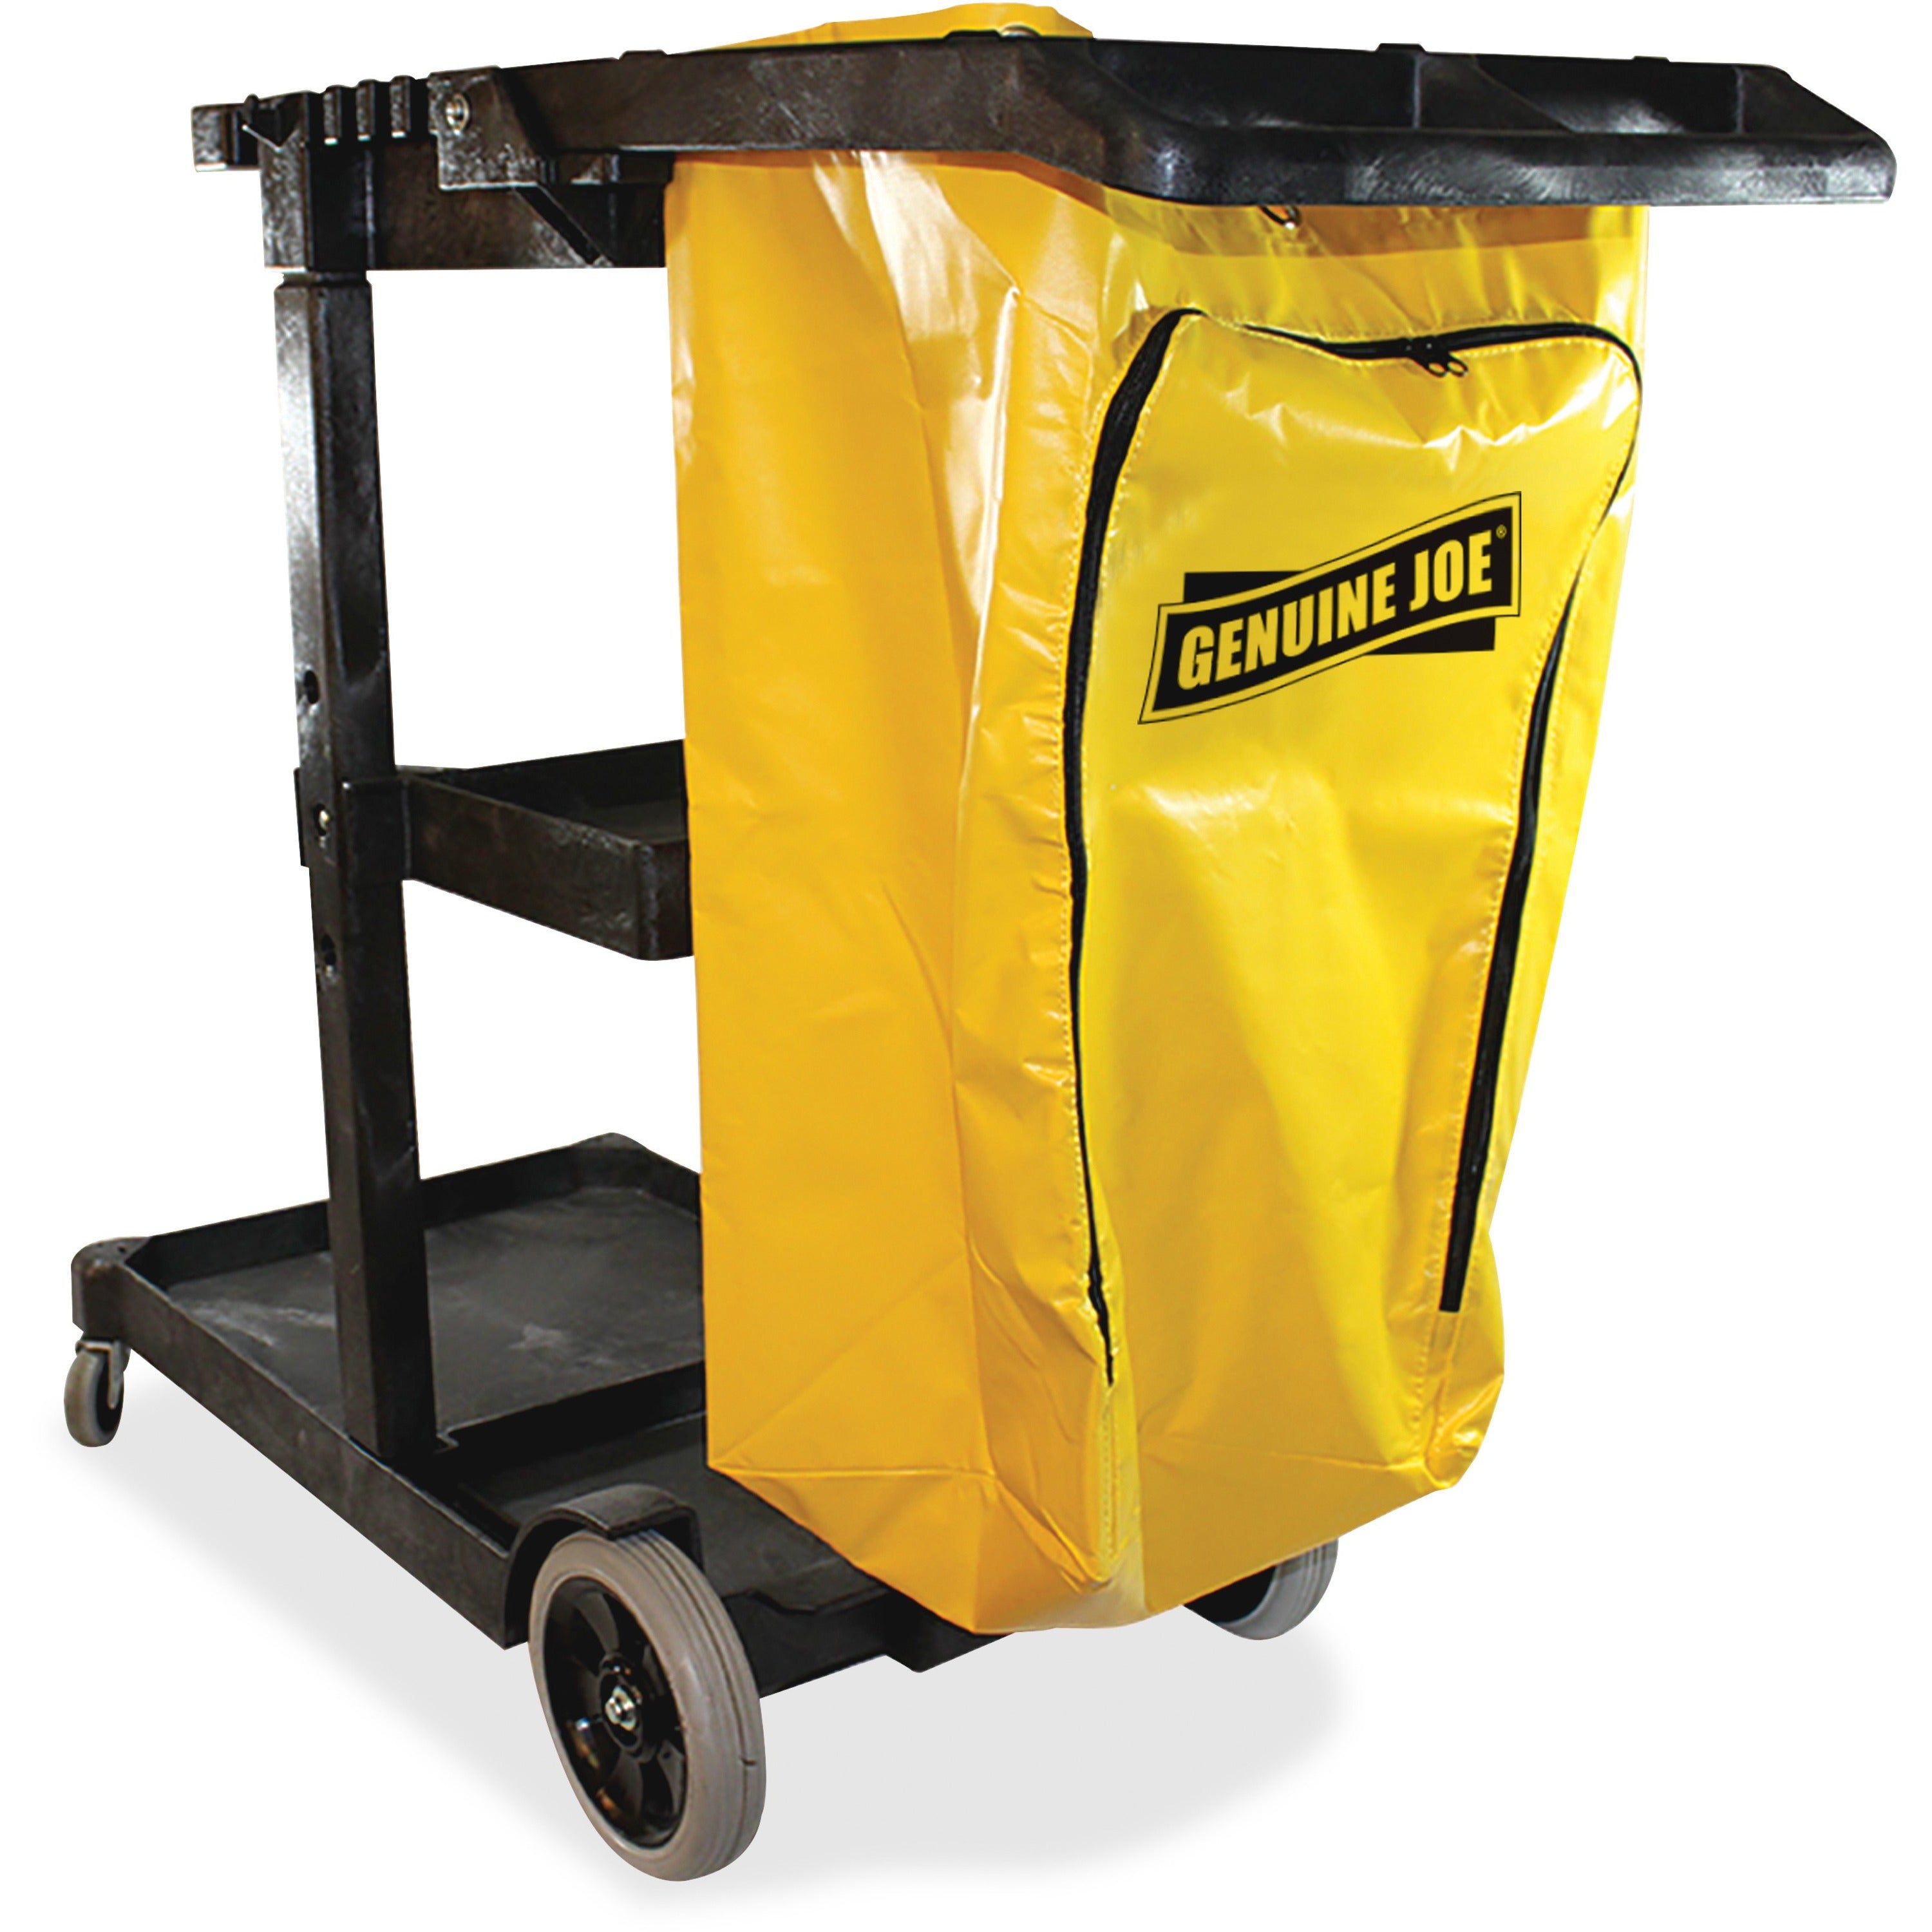 Genuine Joe Workhorse Janitor's Cart - x 40" Width x 20.5" Depth x 38" Height - Charcoal, Yellow - 1 Each - 